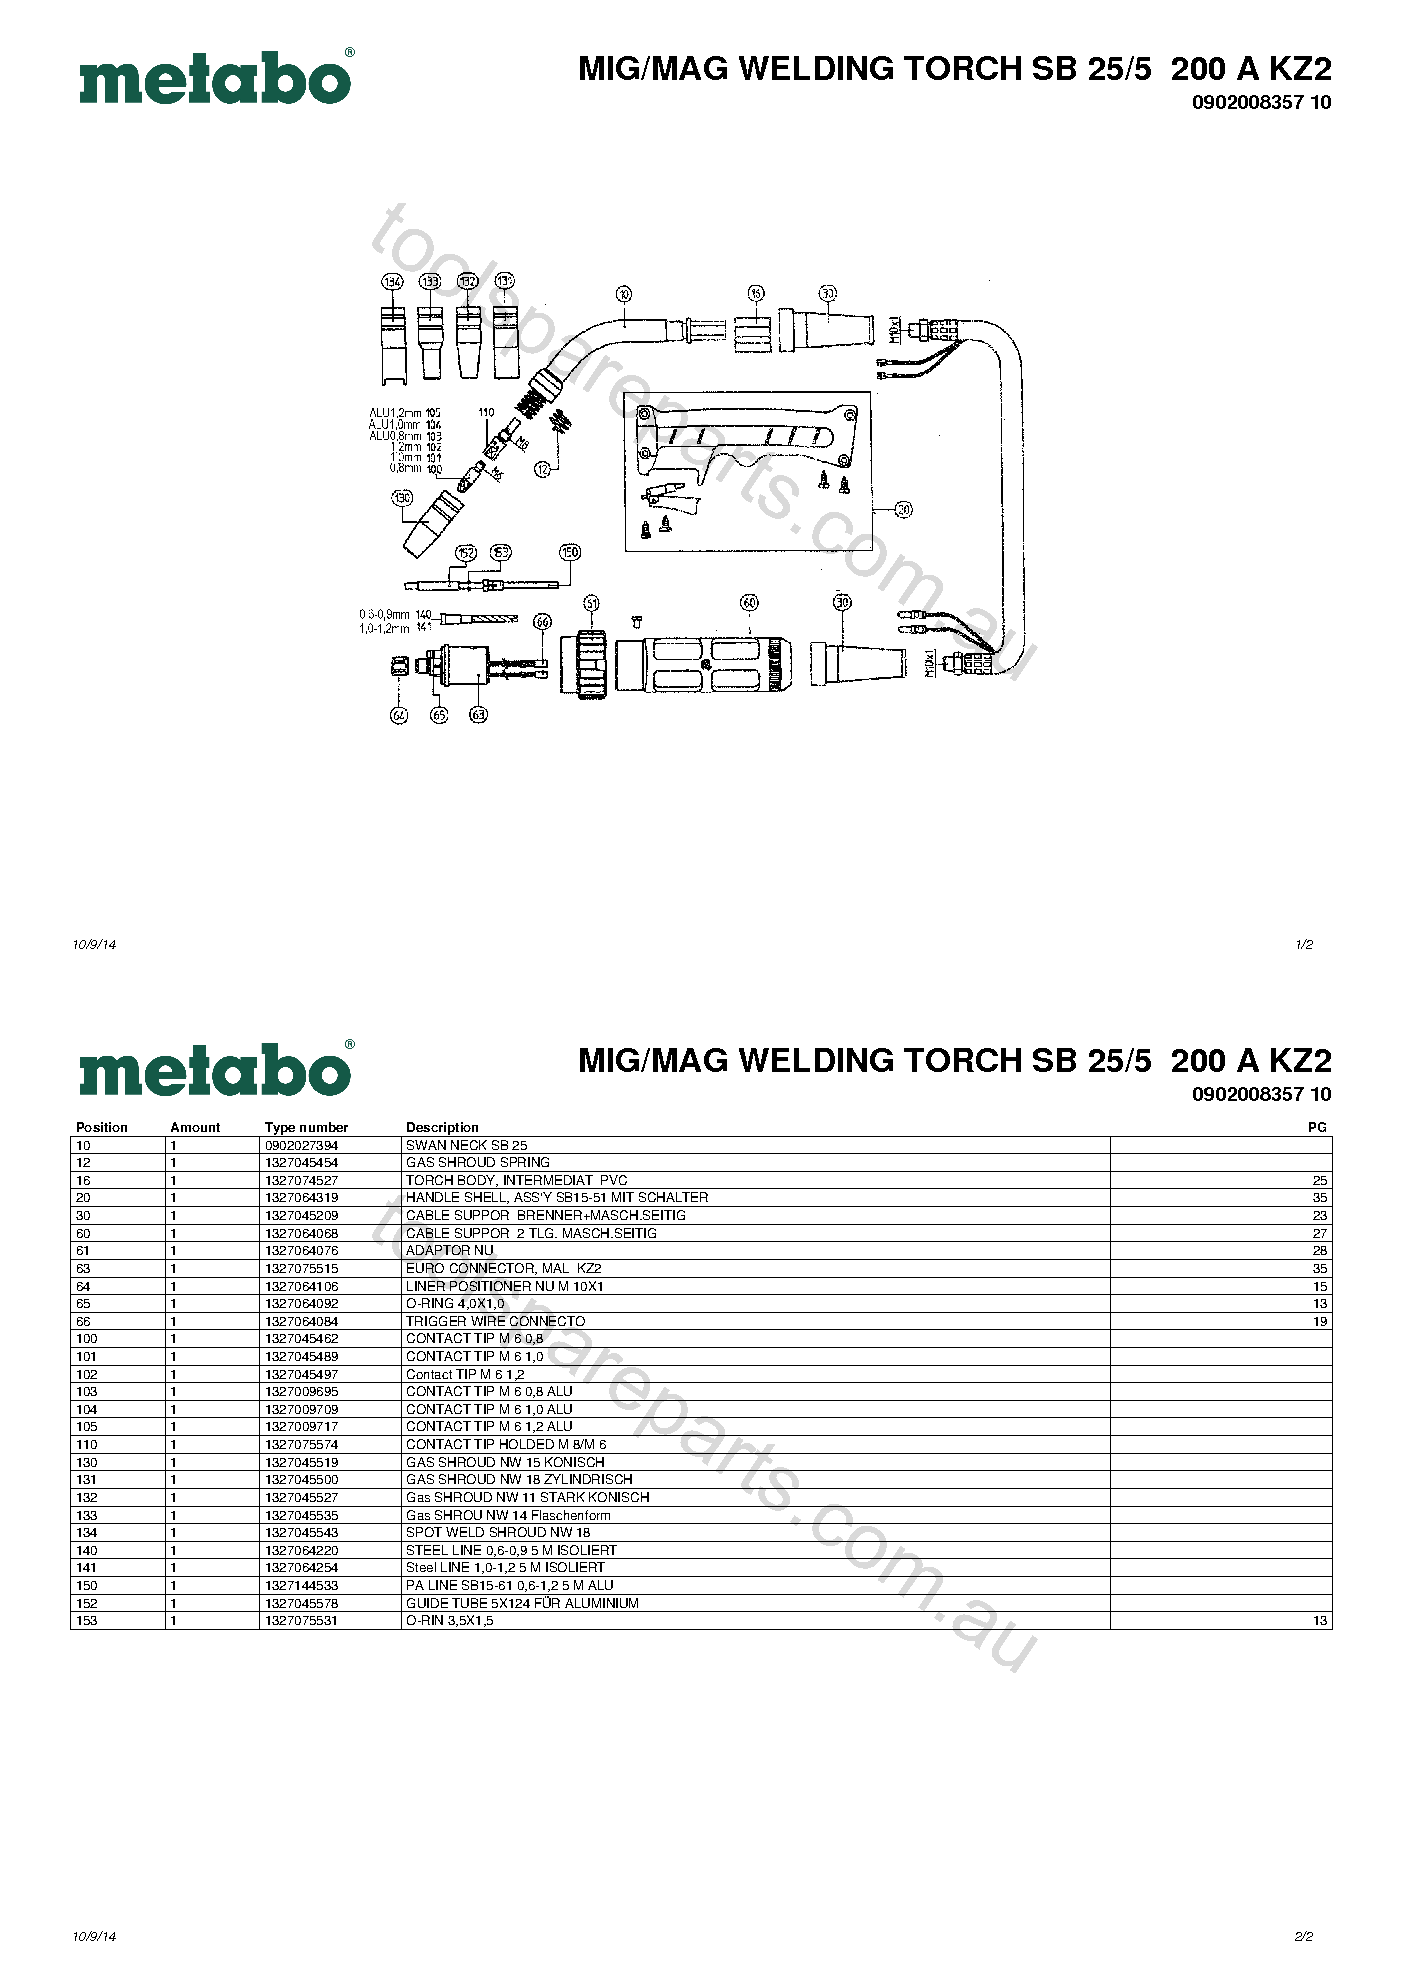 Metabo MIG/MAG WELDING TORCH SB 25/5 200 A KZ2 0902008357 10  Diagram 1